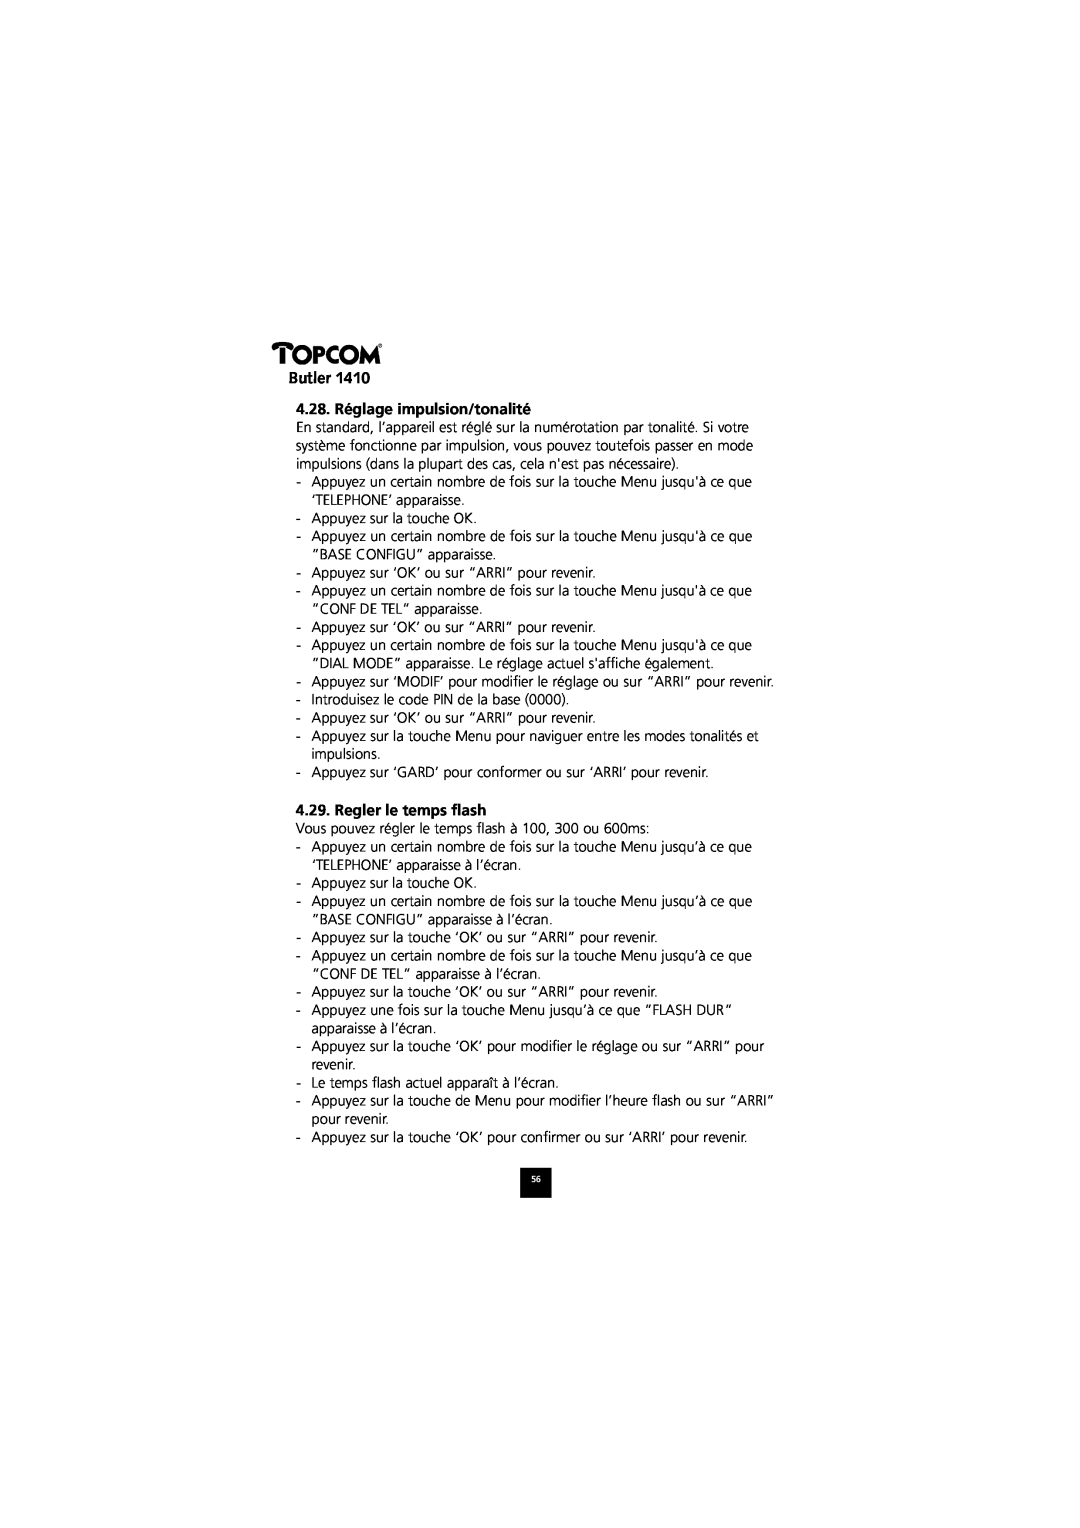 Topcom 1410 manual 4.28. Réglage impulsion/tonalité, Regler le temps flash, Butler 